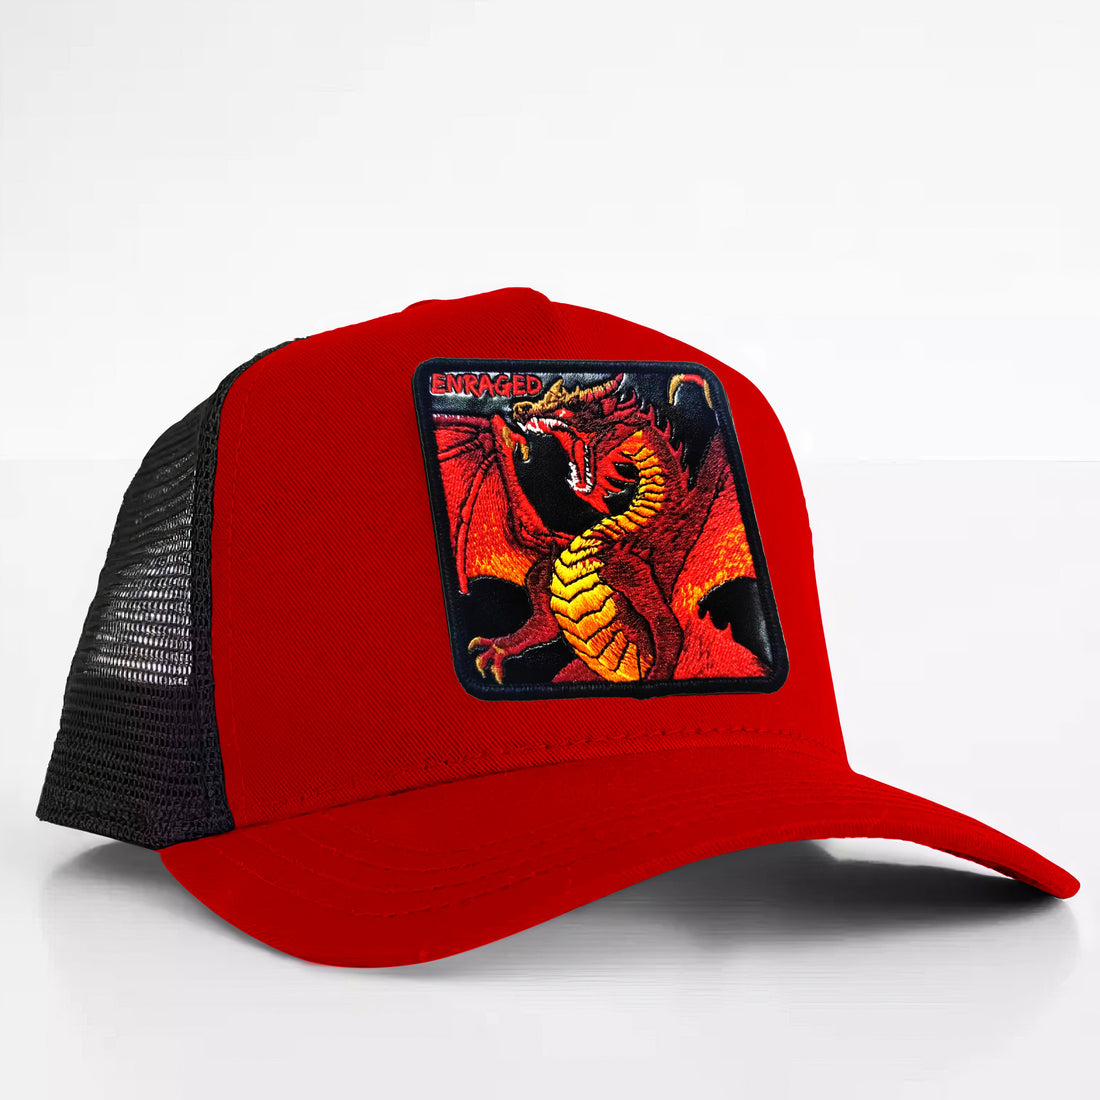 Fire Dragon " enraged" Trucker Hat